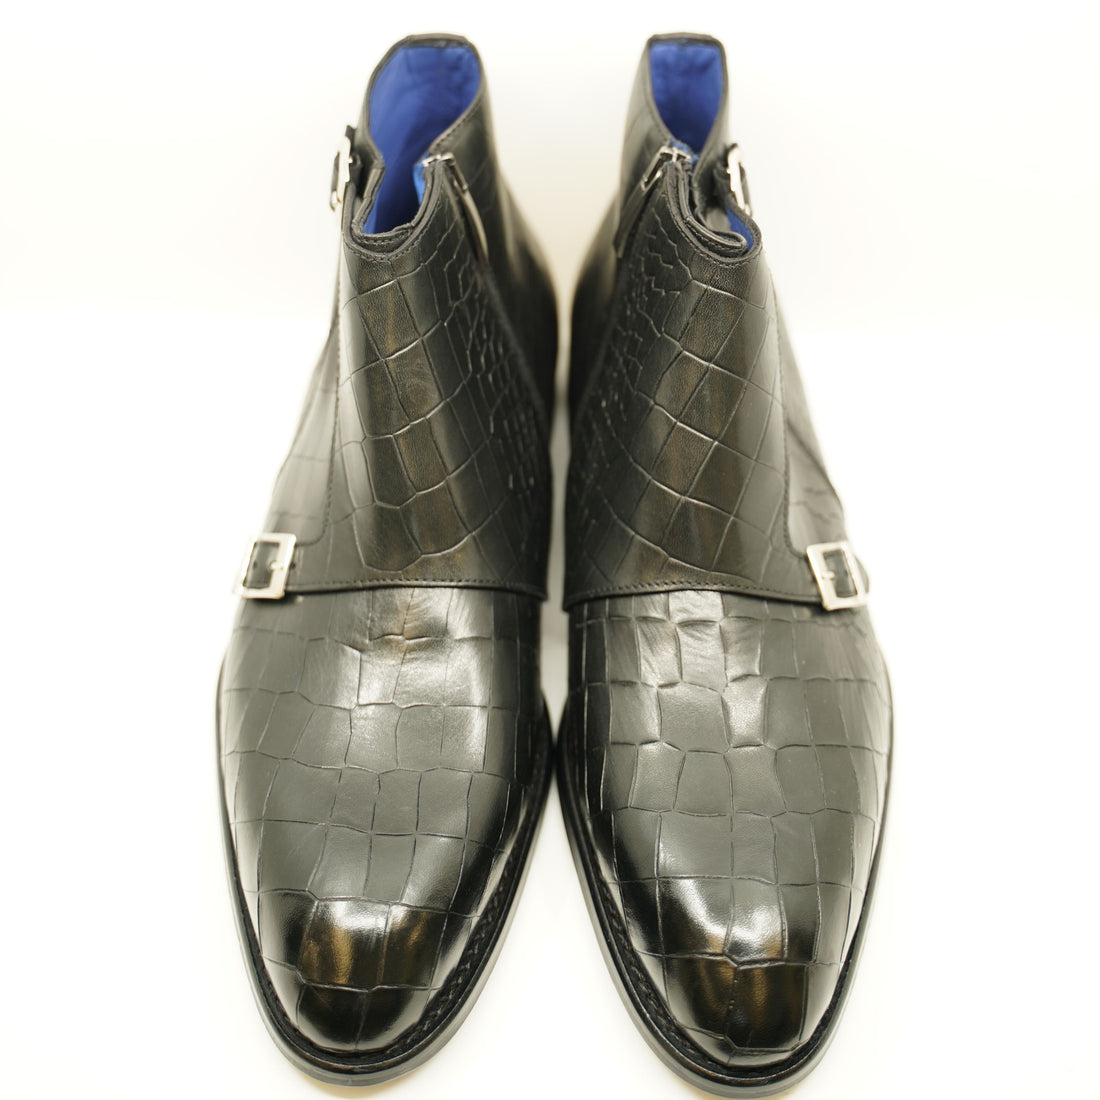 Andrea Nobile  - Black croc print ankle boots with double monk strap